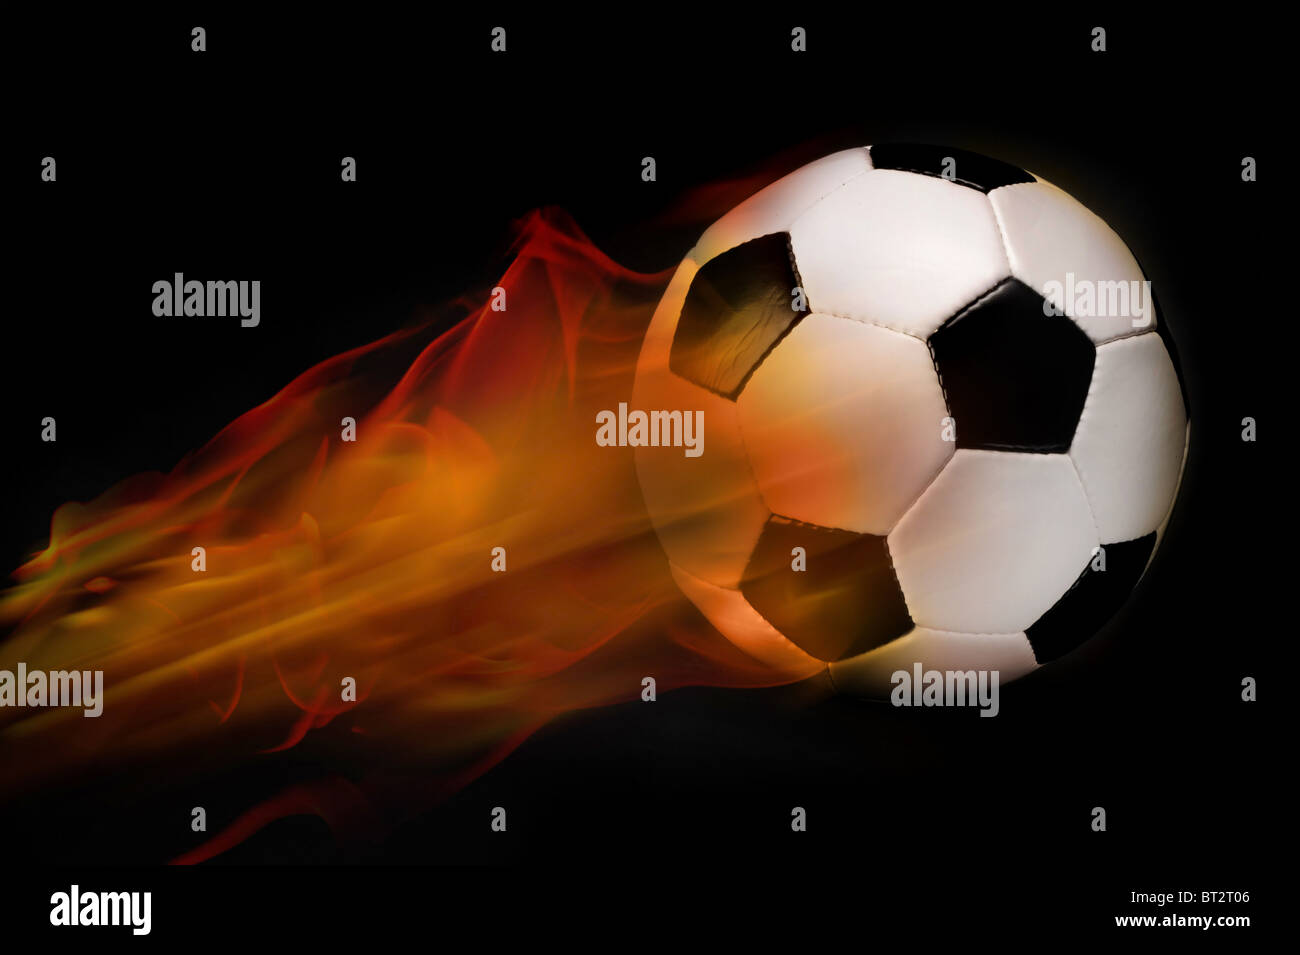 Soccer ball on Fire. Stock Photo